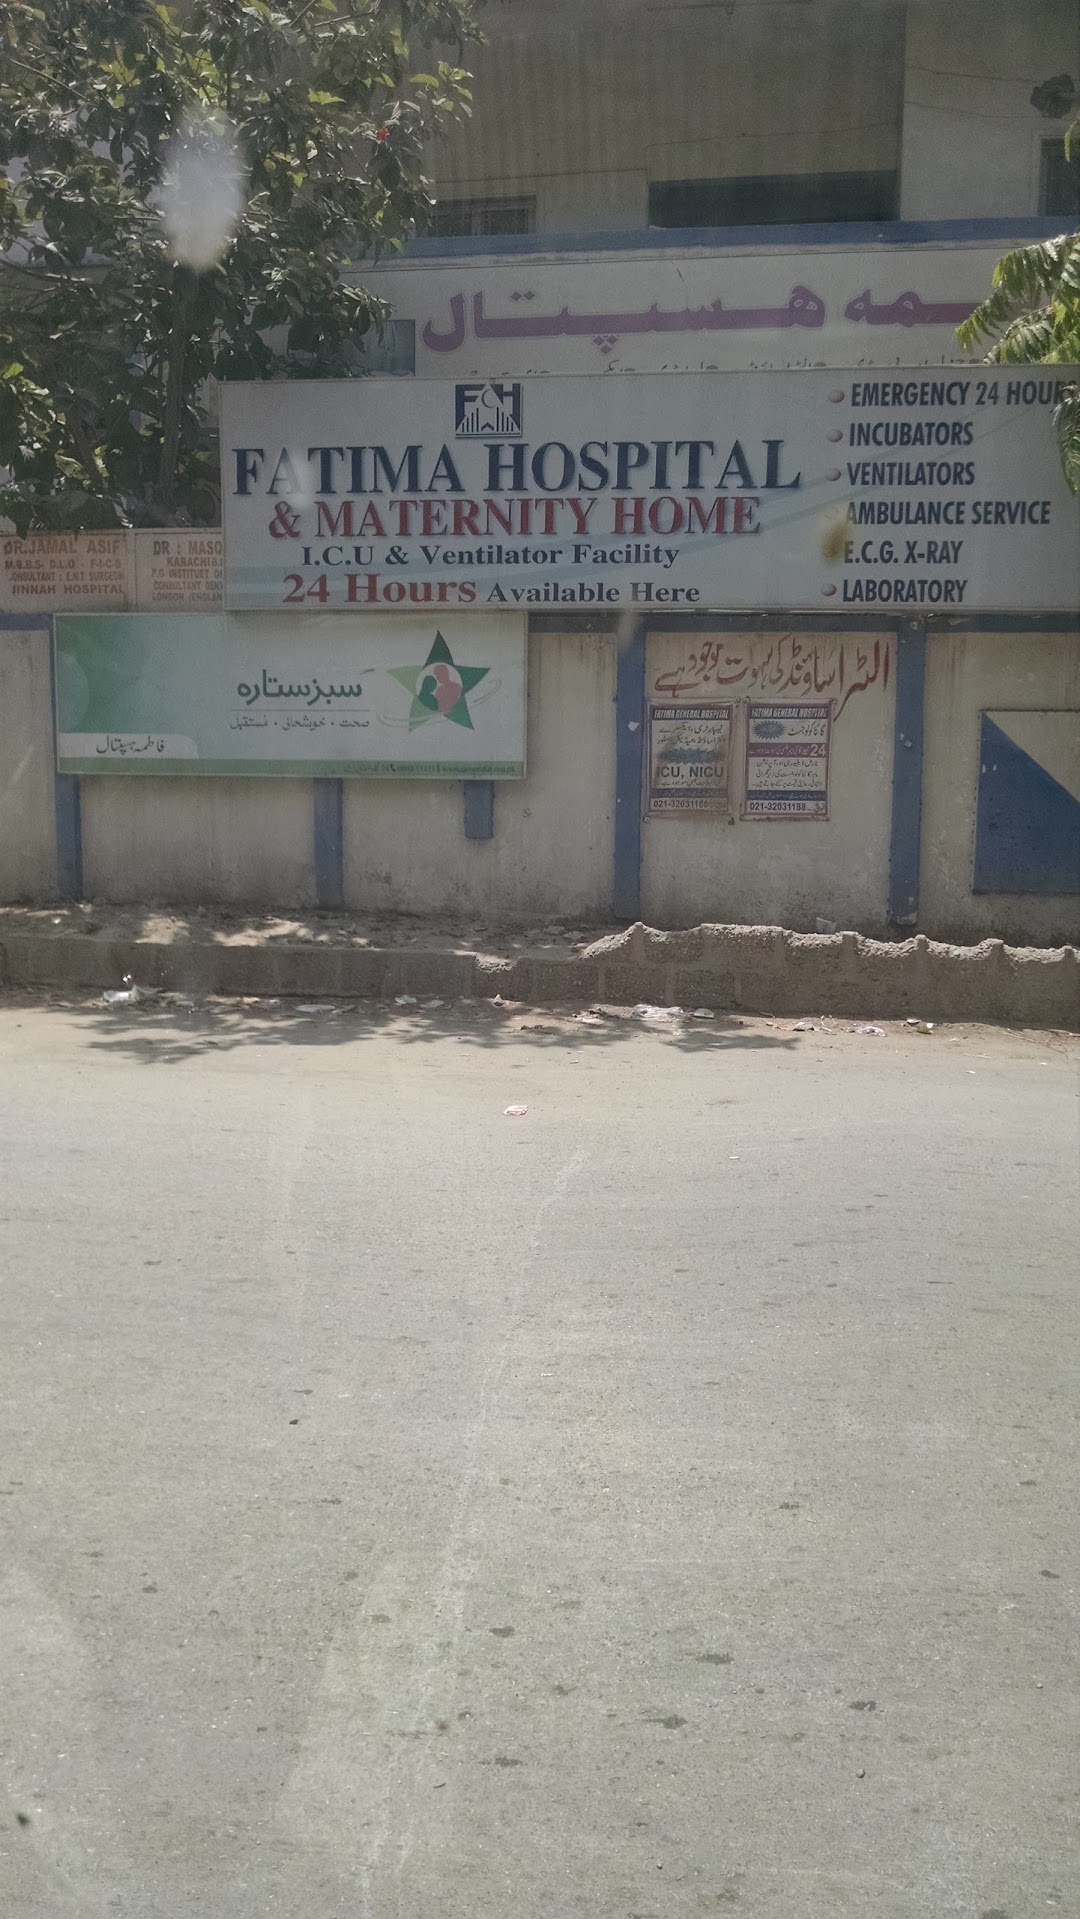 Fatima Hospital and maternity home